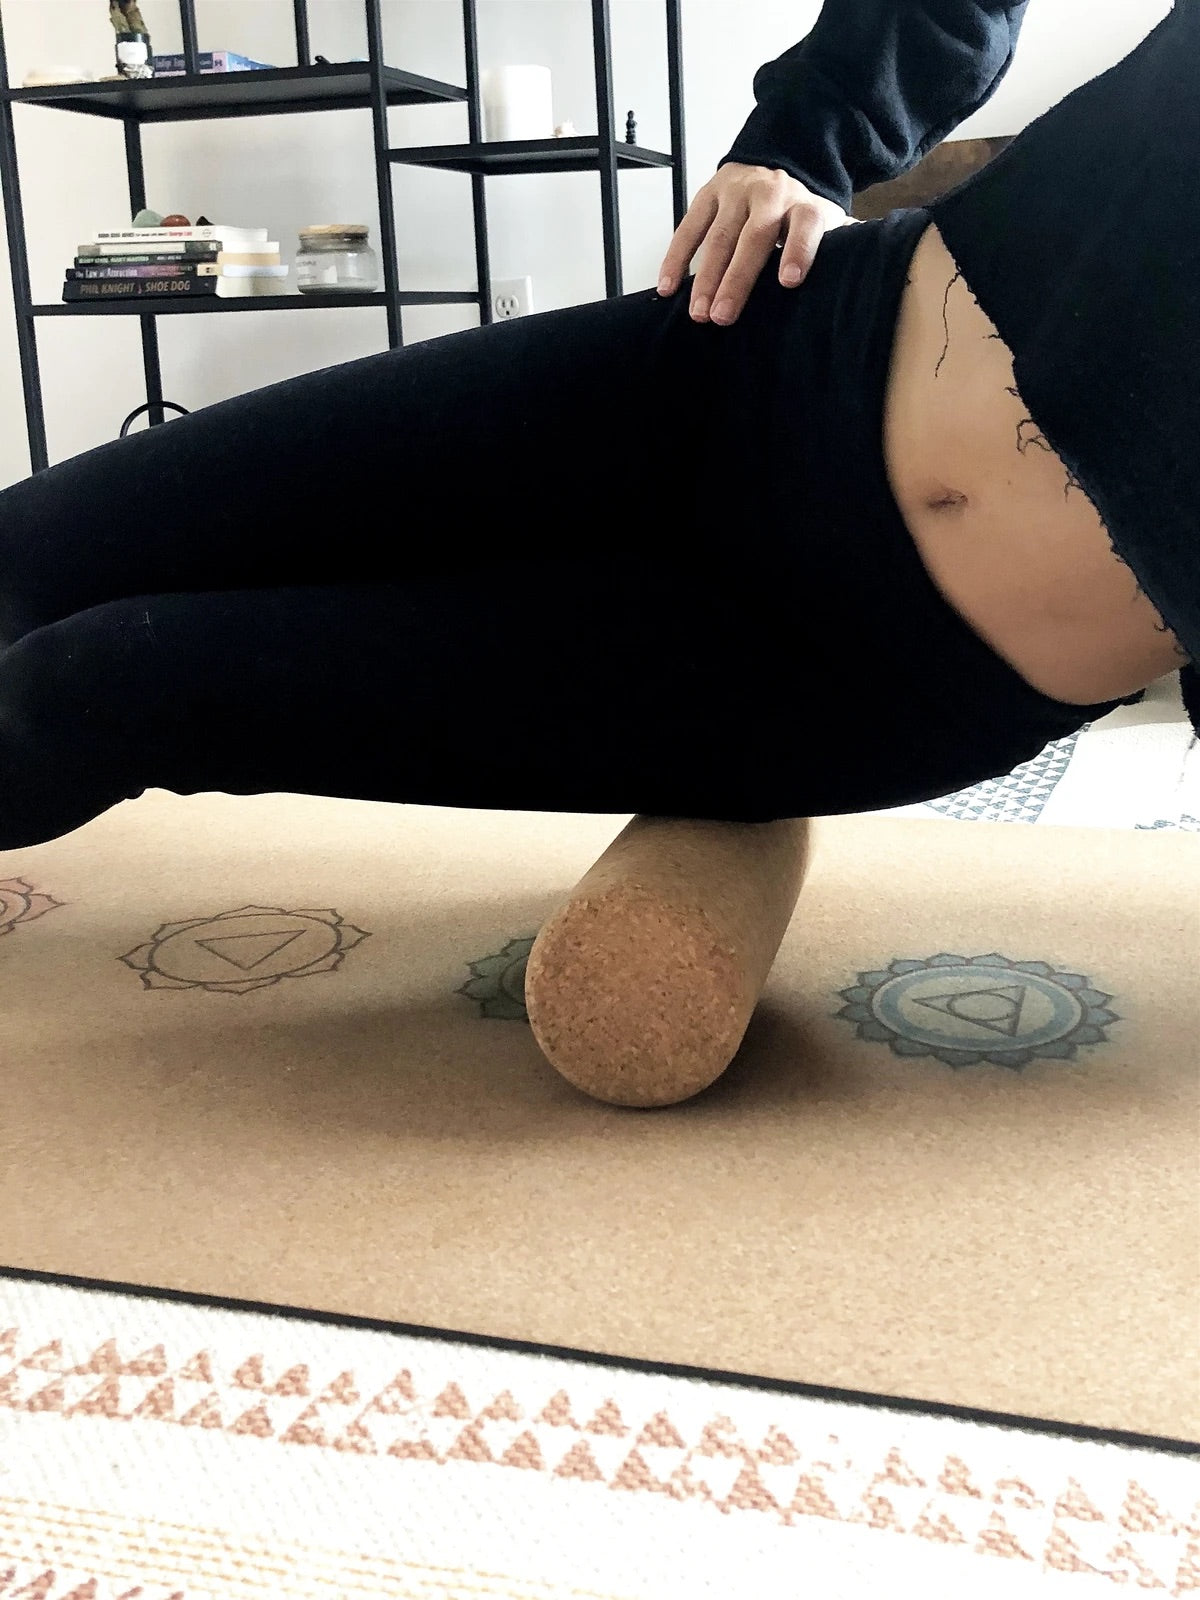 Cork Yoga/Massage Roller